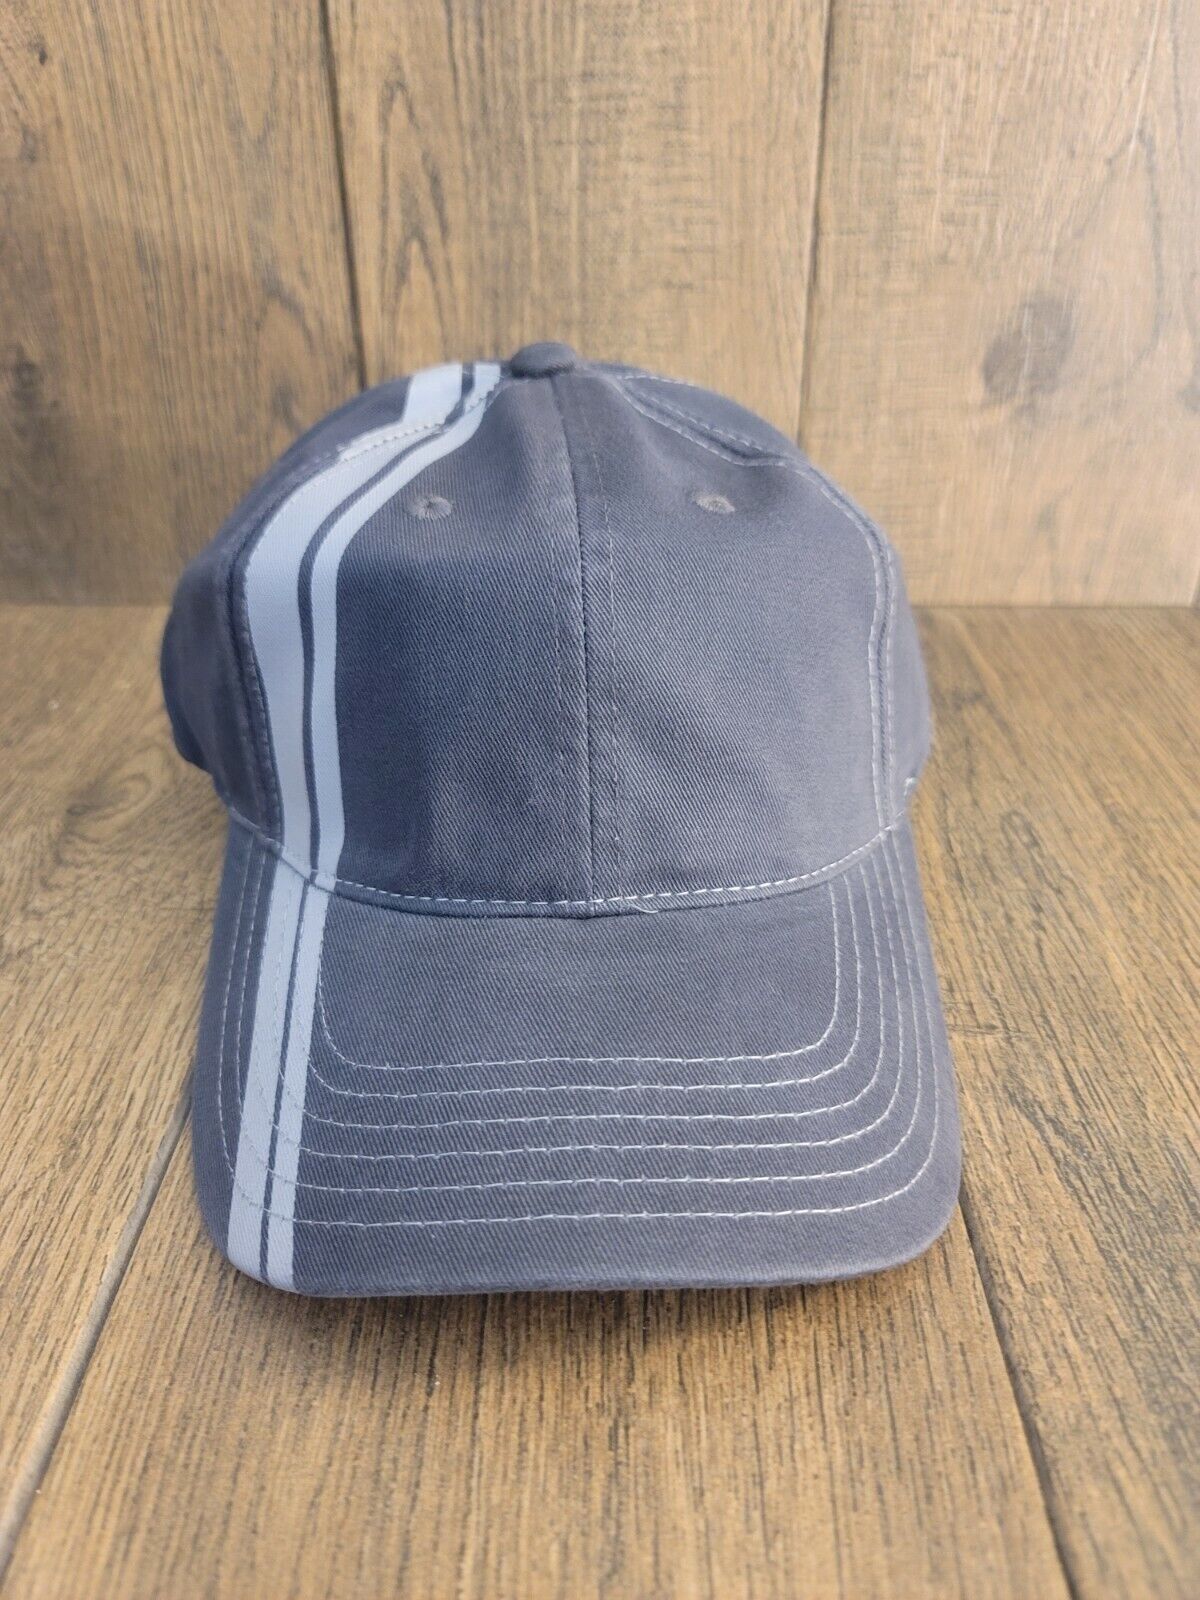 Dark Gray With Light Gray Stripe Adjustable Baseball Cap Port & Company - $8.75